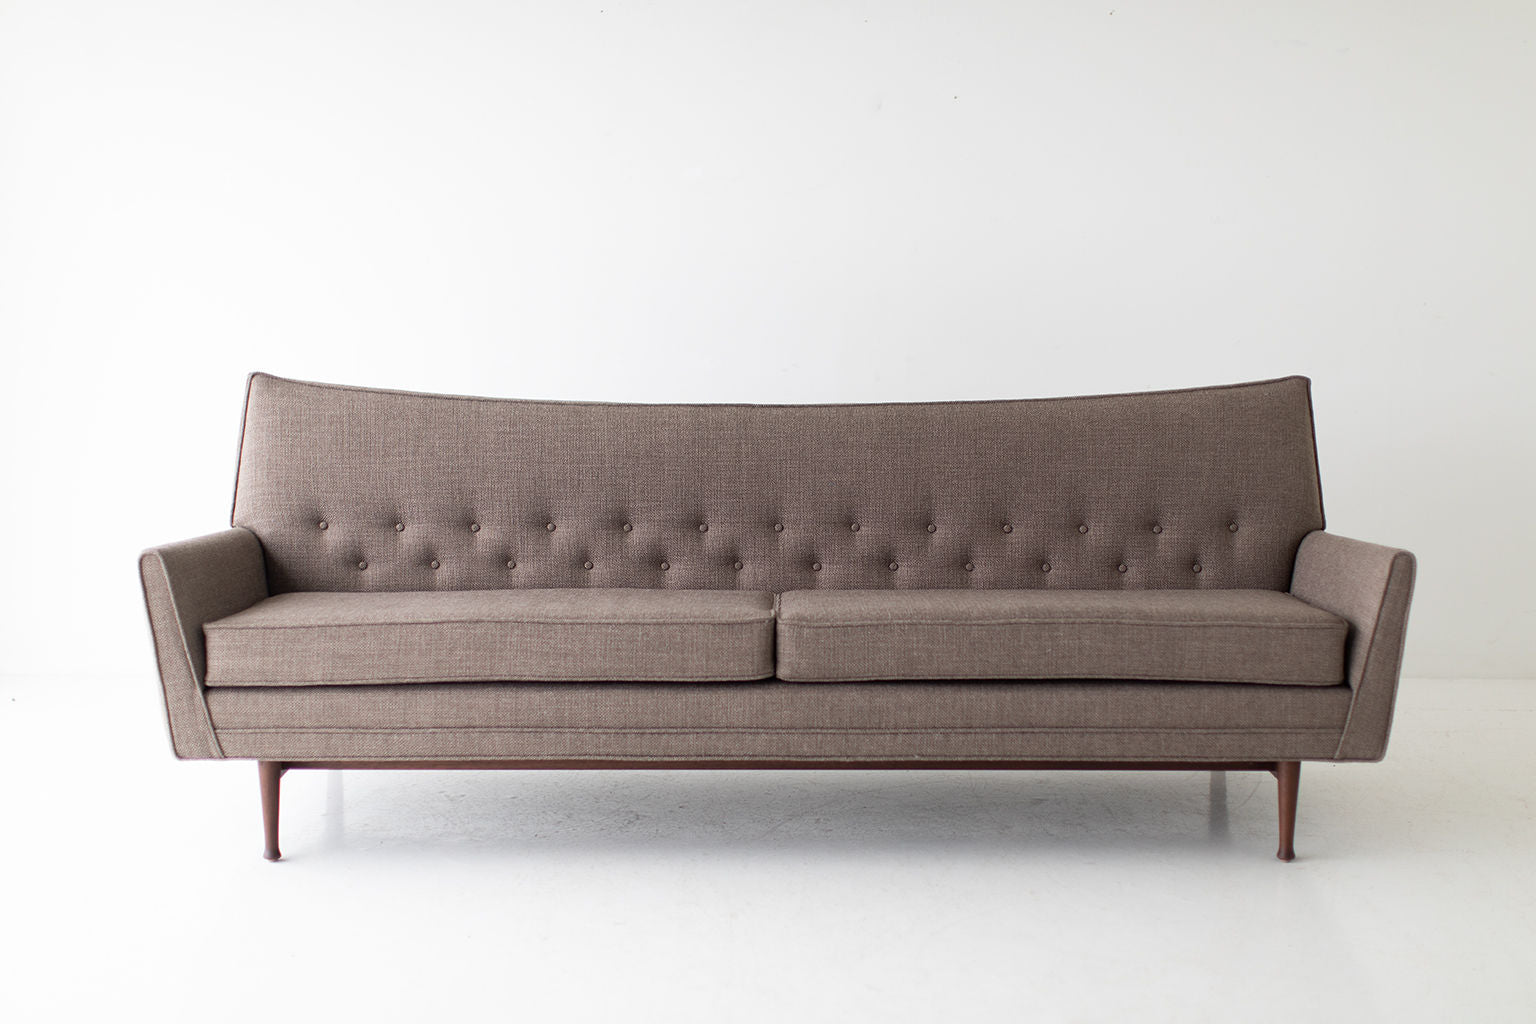 Lawrence-peabody-modern-sofa-craft-associates-furniture-1908P-01